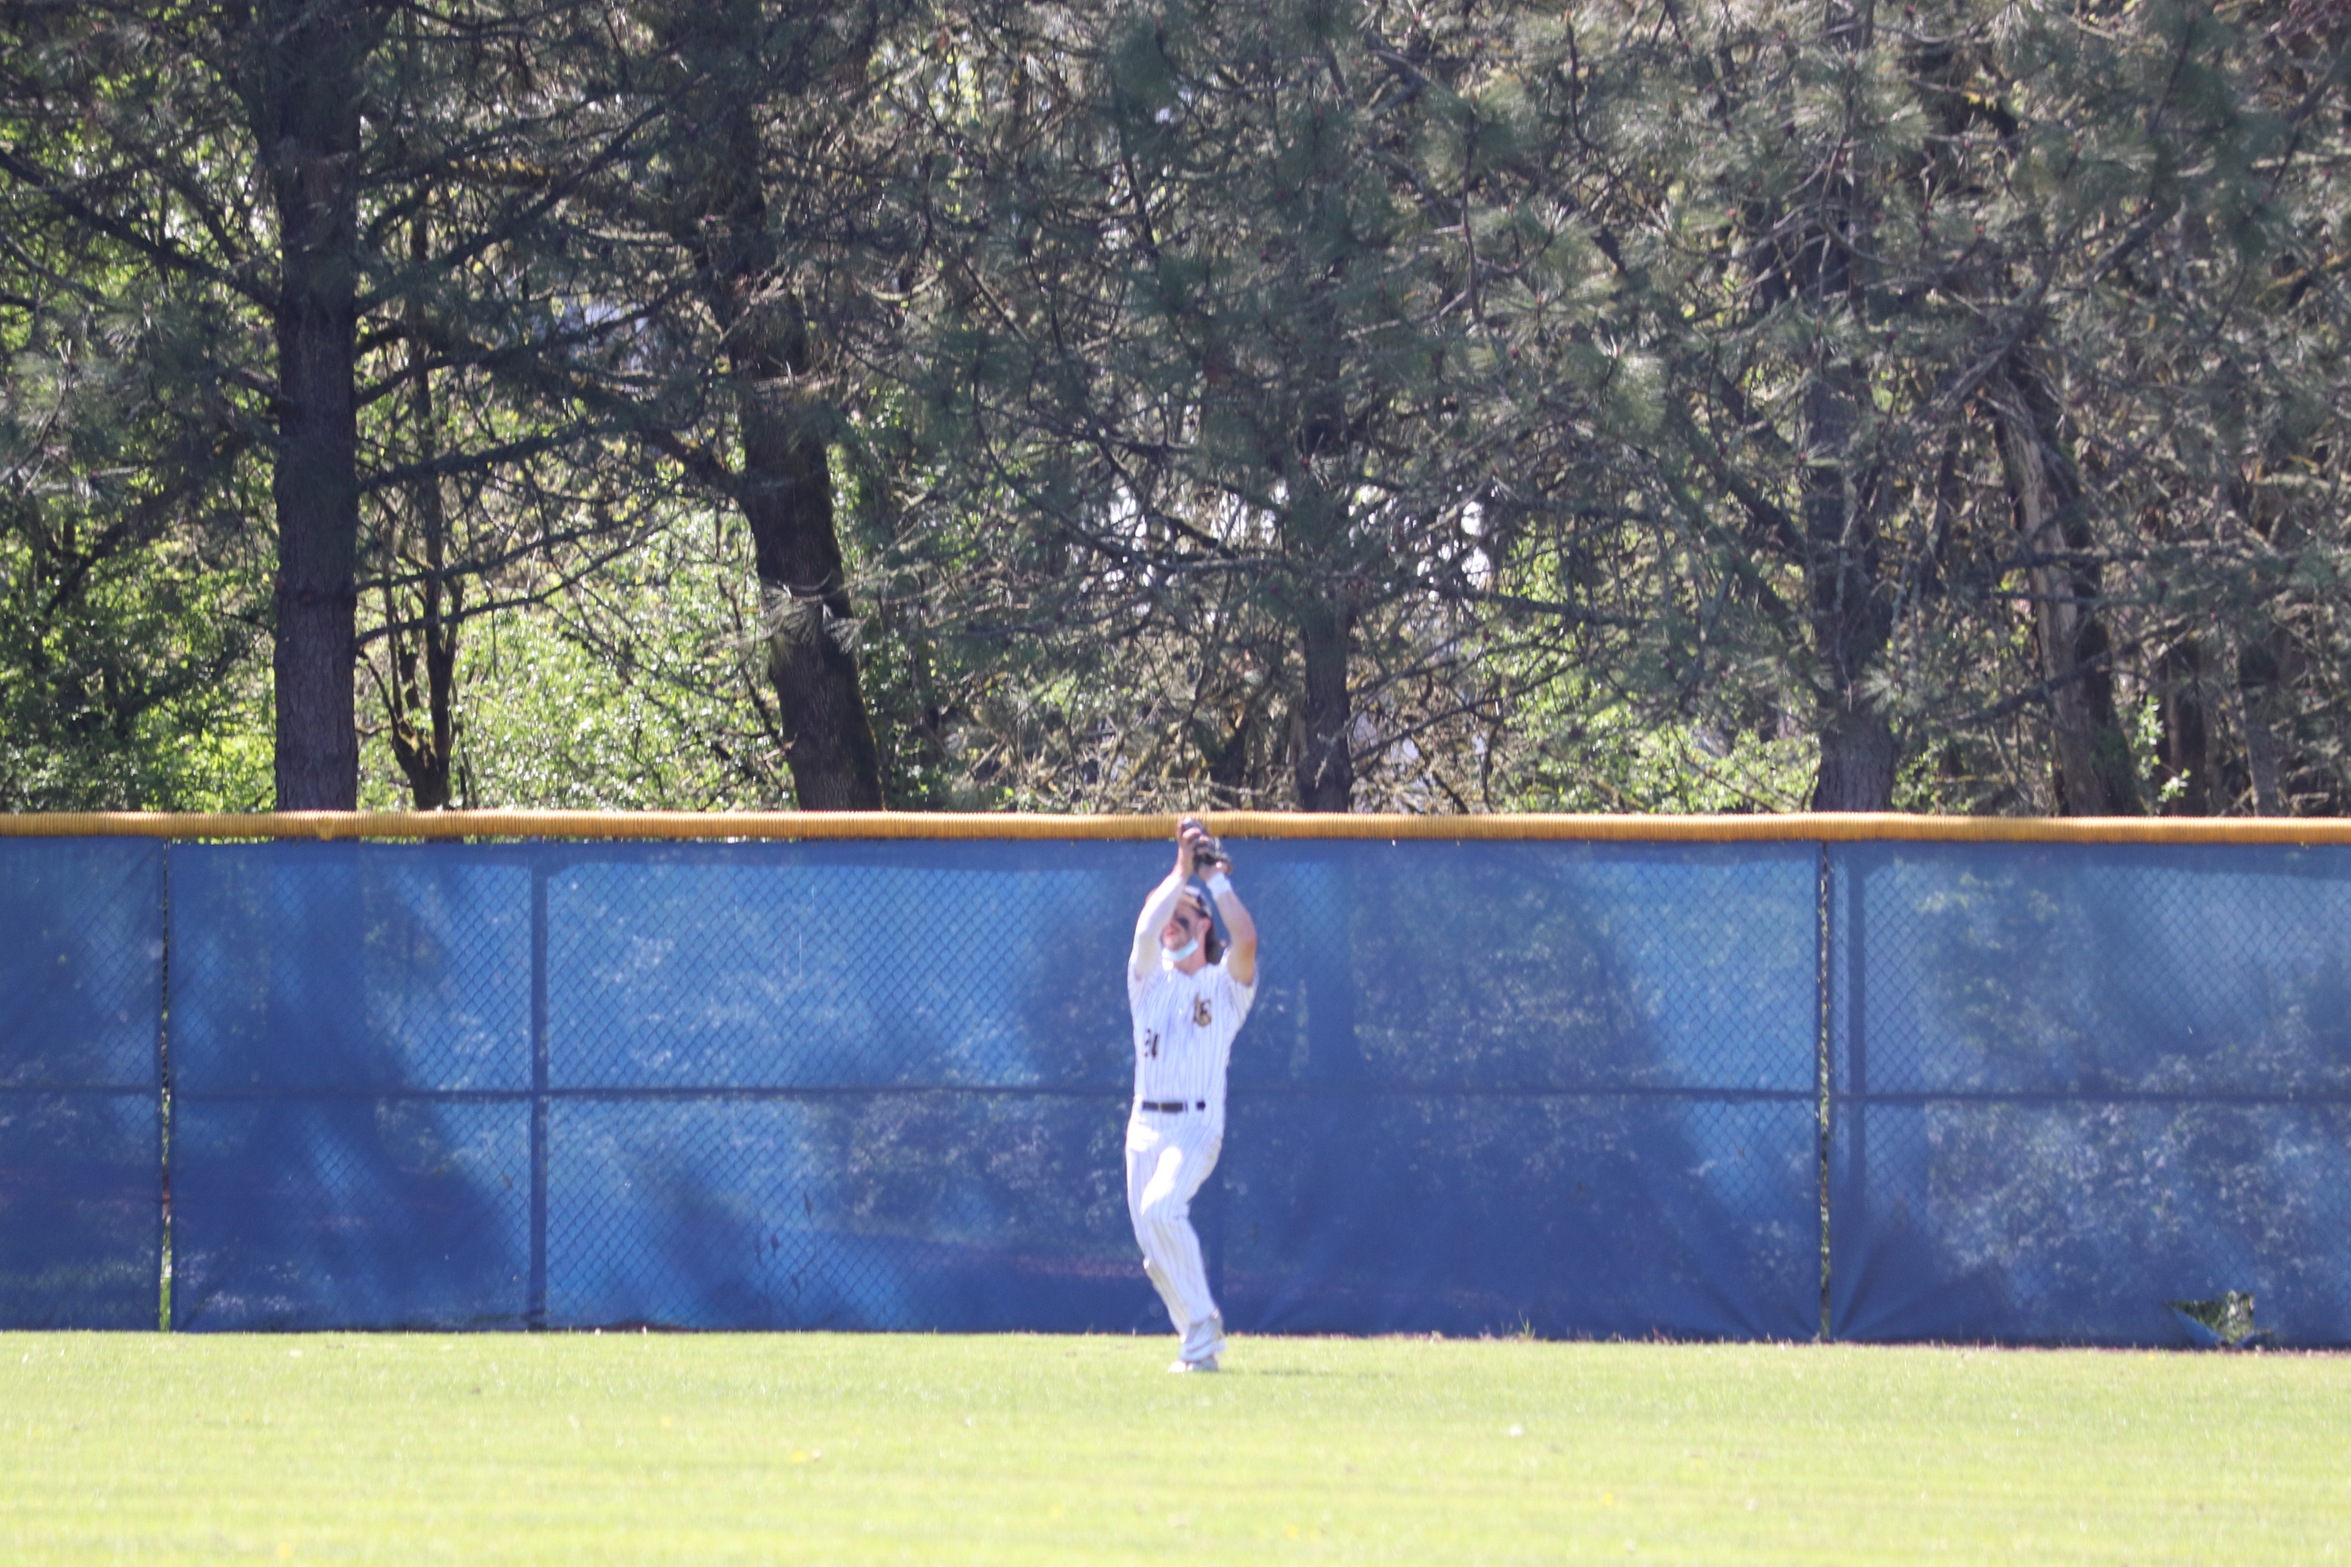 McIntrye catches center field